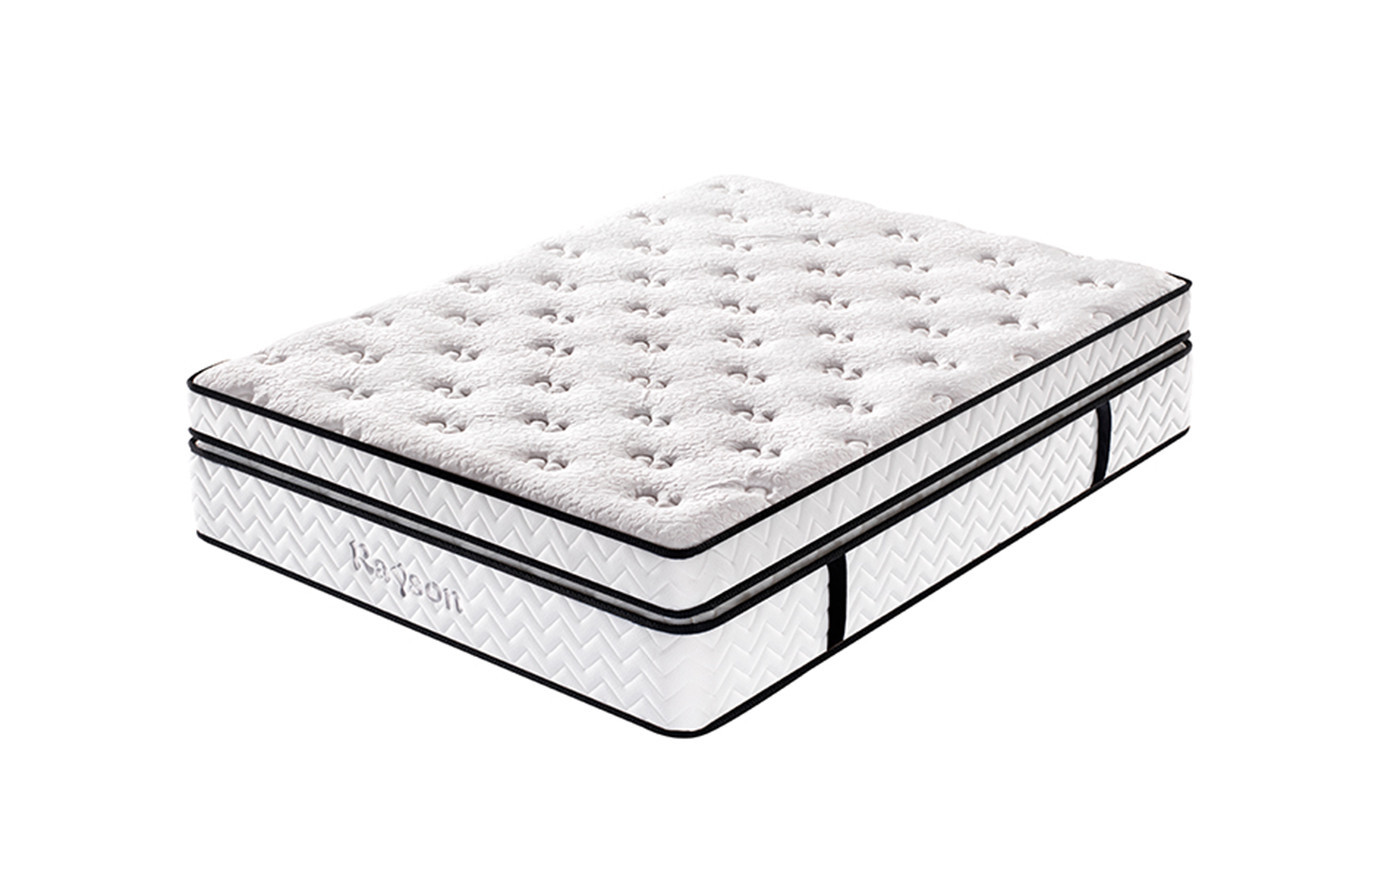 Synwin memory foam luxury hotel mattress innerspring bulk order